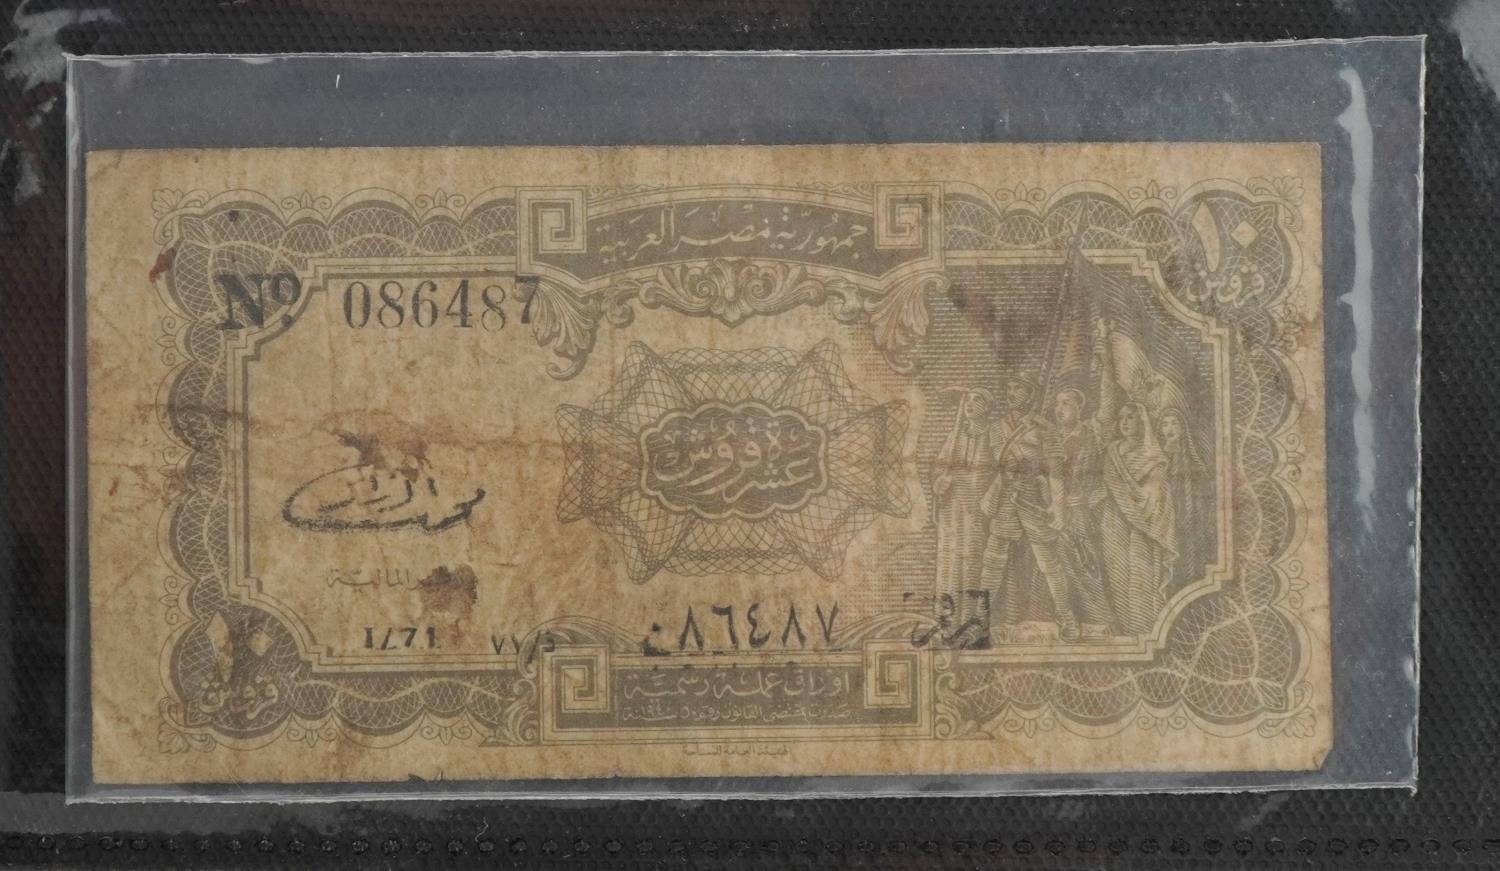 World banknotes arranged in an album including Bank of Scotland twenty pounds, Kenya, Indonesia - Image 5 of 10